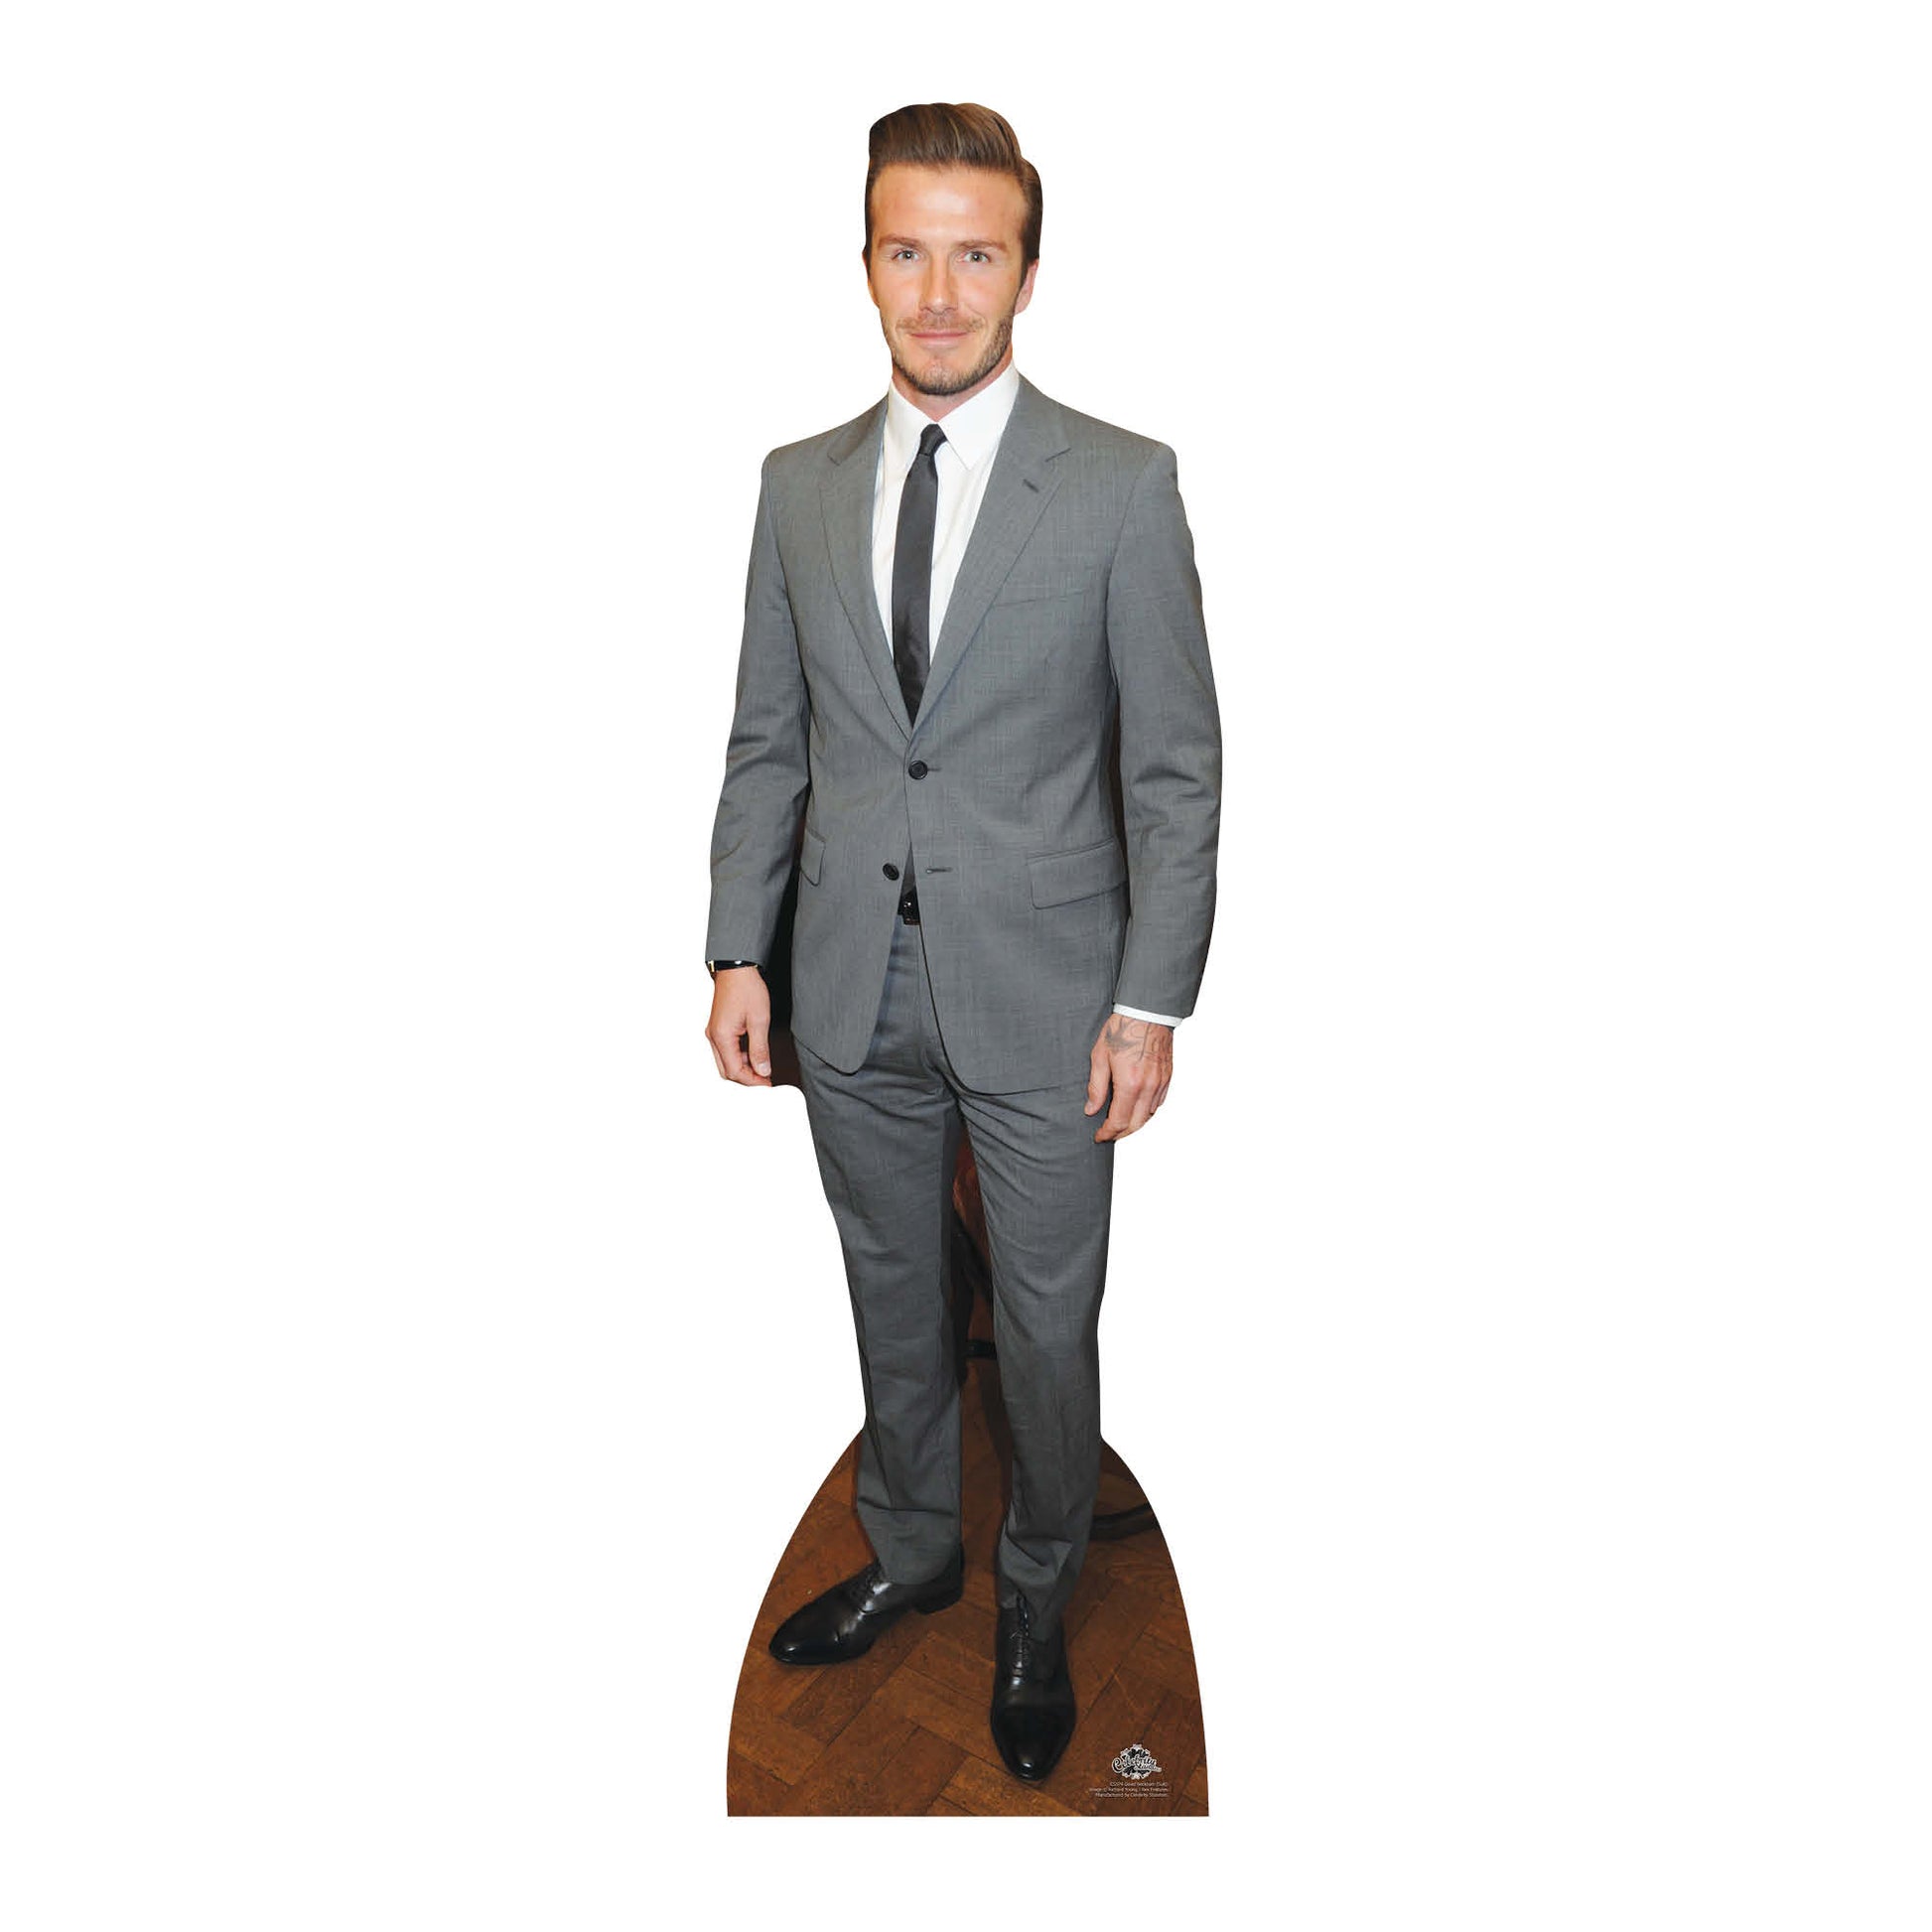 David Beckham Suit  Cardboard Cutout MyCardboardCutout